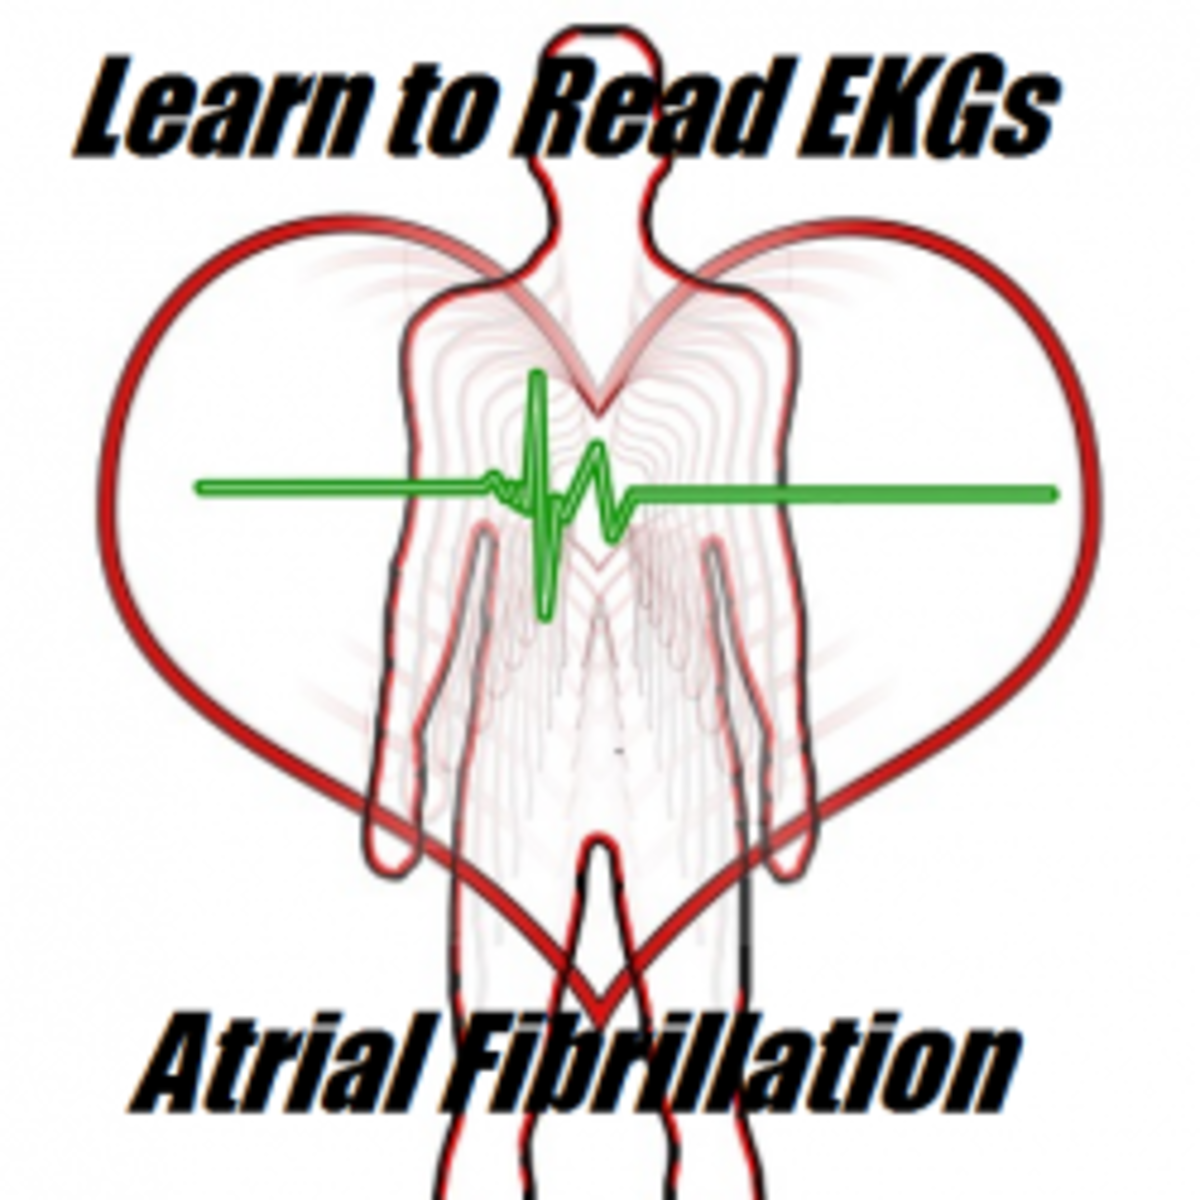 The Basics of Ekg Interpretation and Rhythm Recognition: Atrial Fibrillation